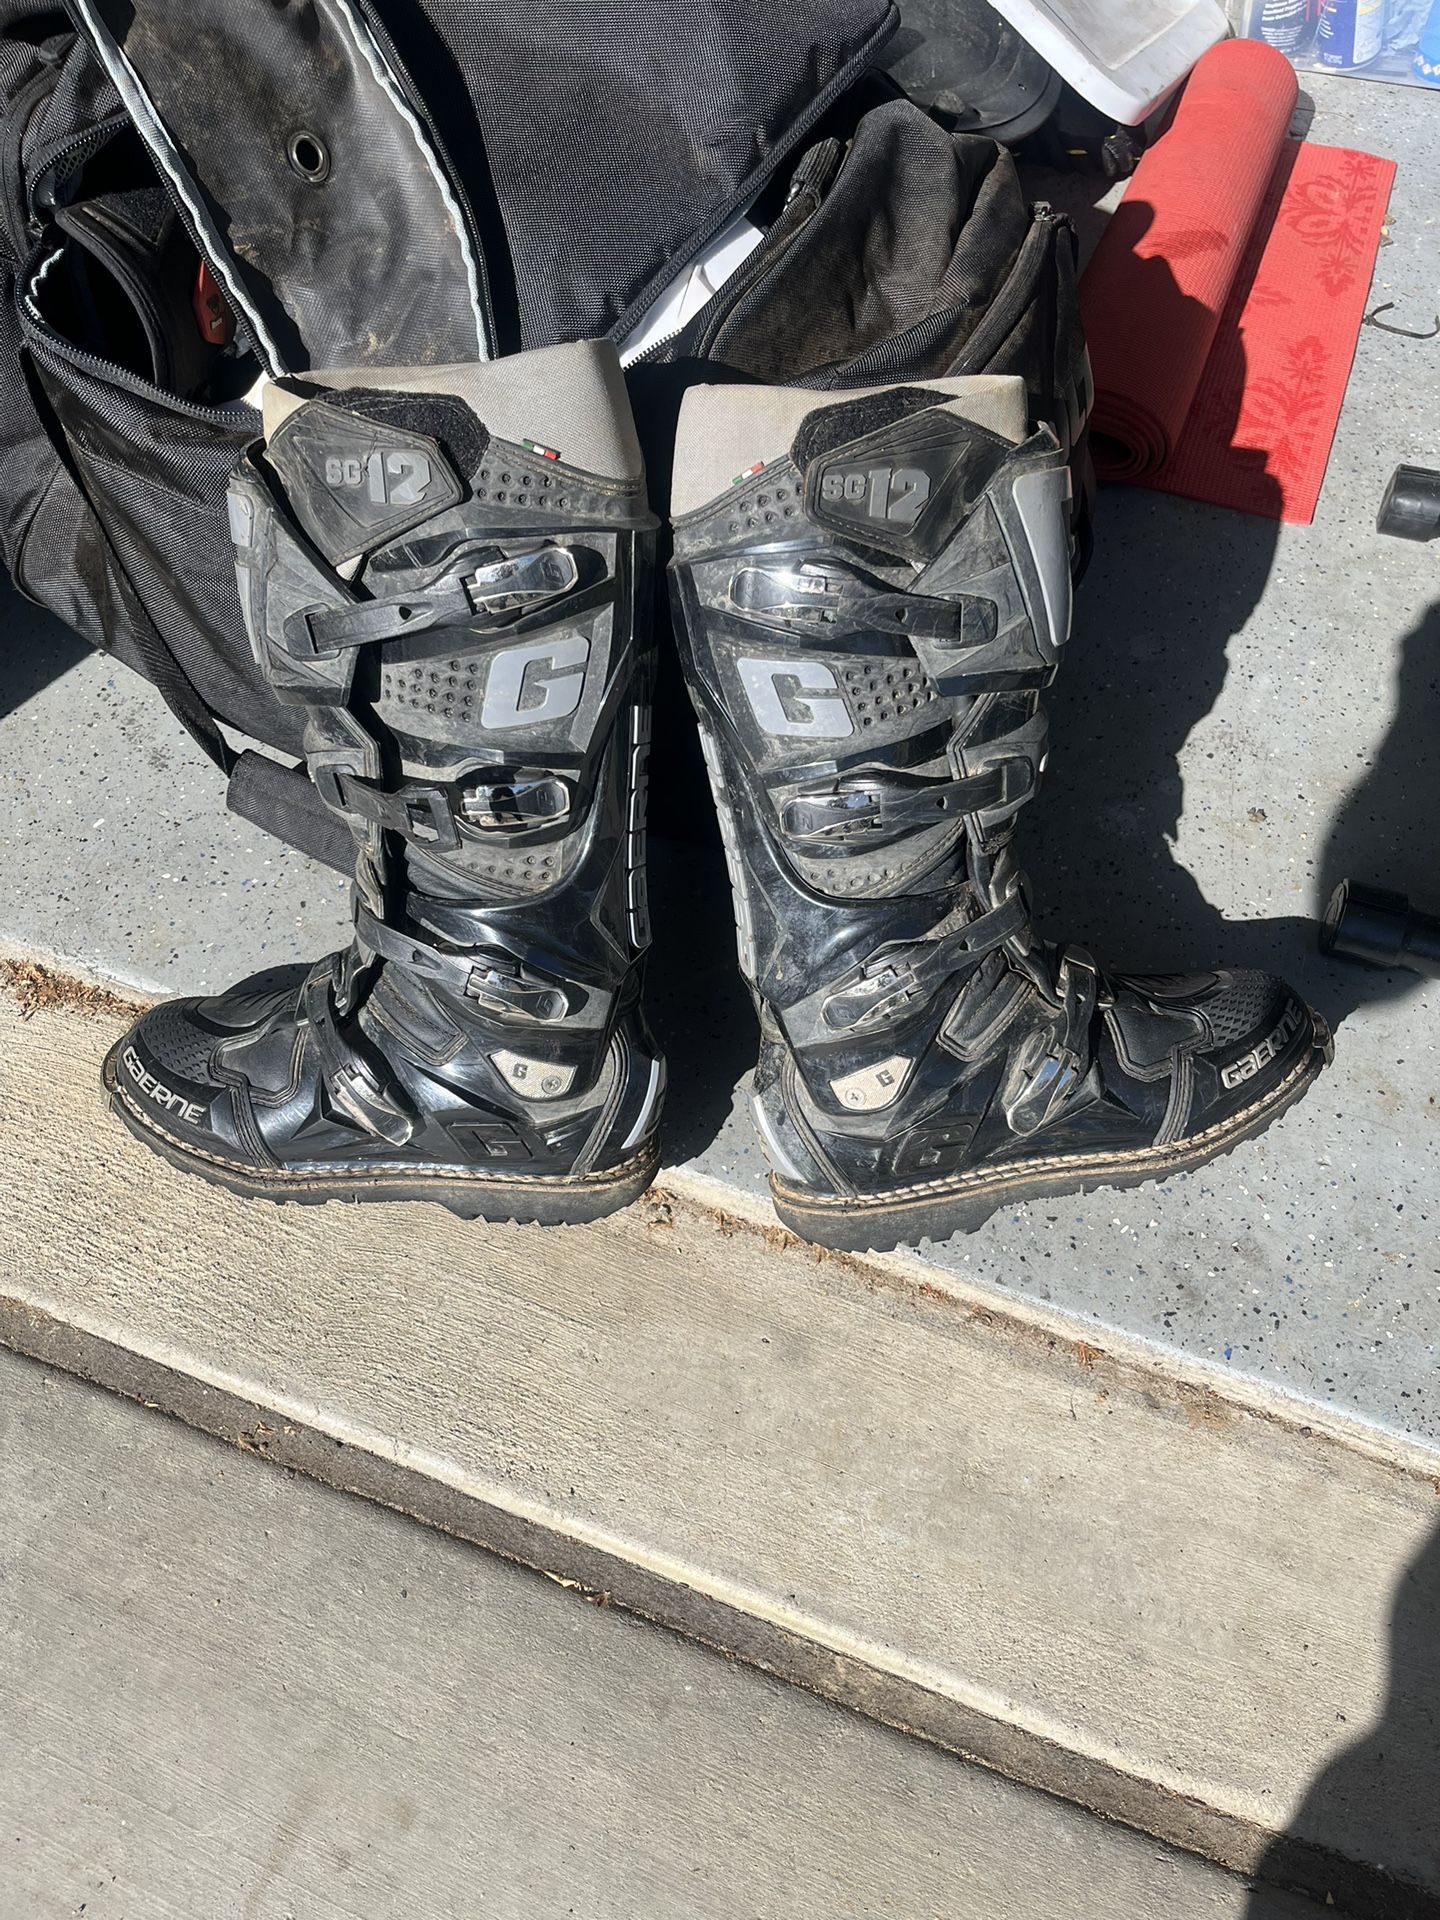 Gaerne SG-12 Enduro Riding Boots - Size 11